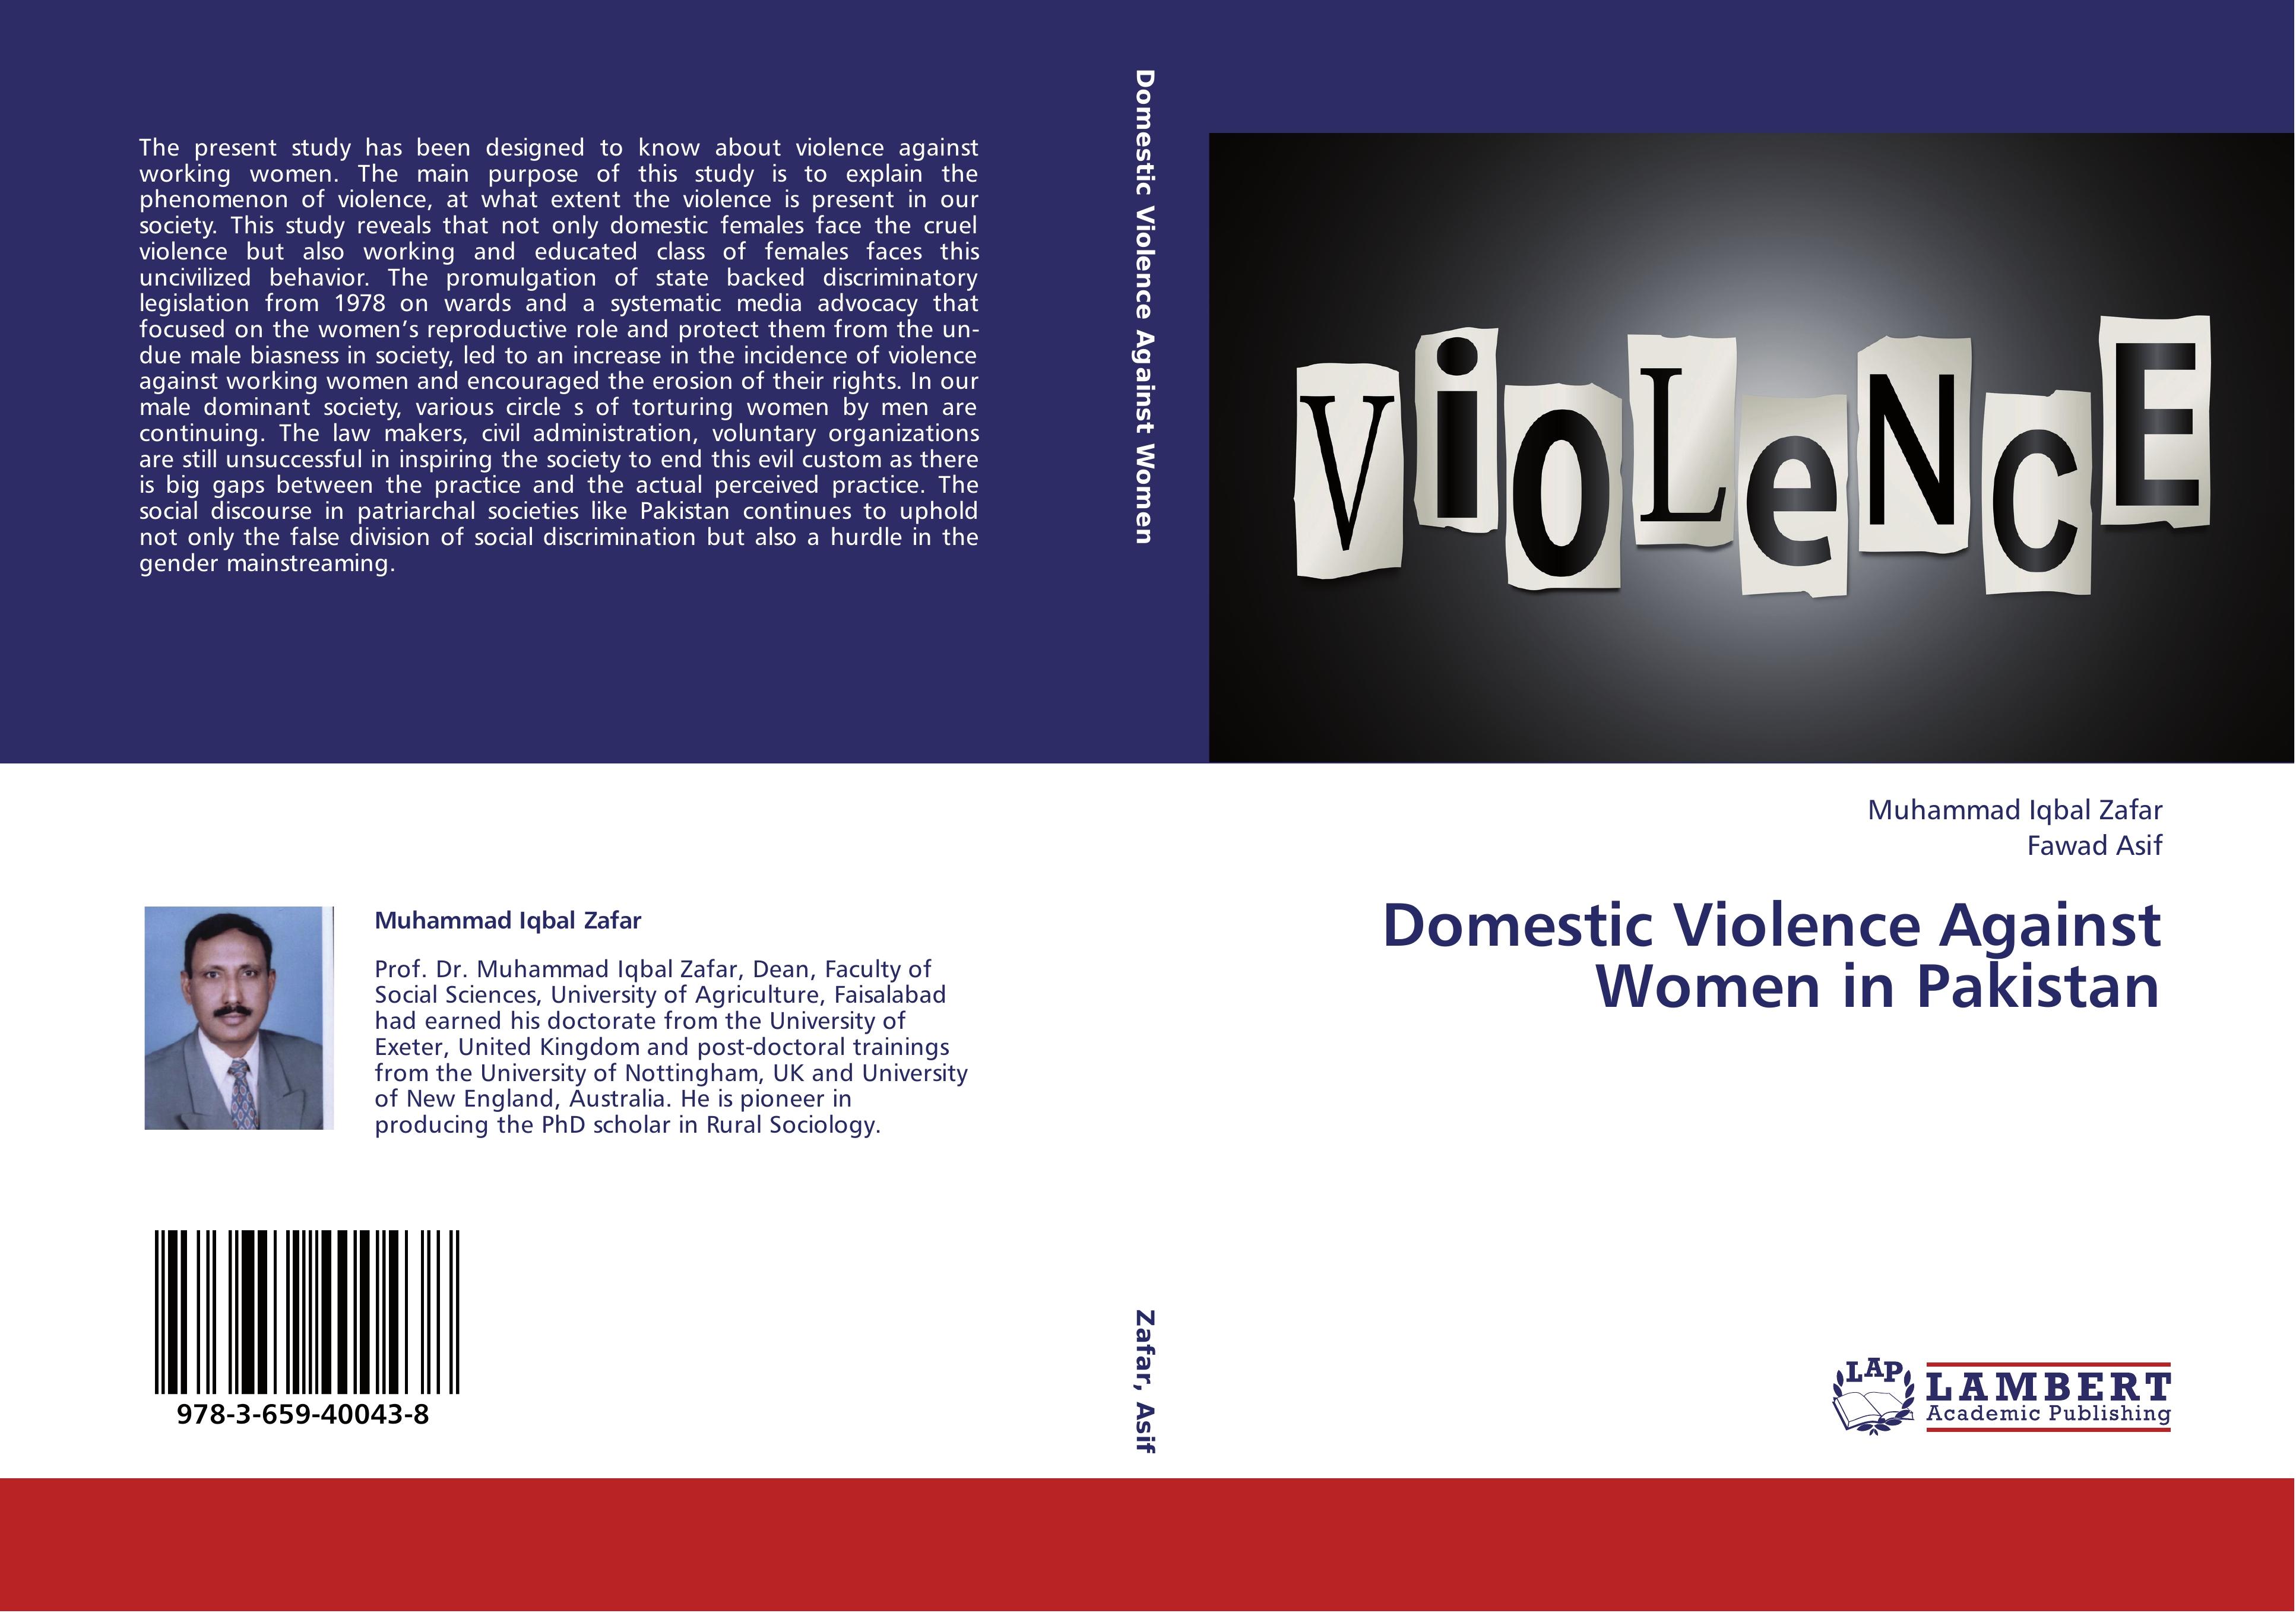 Domestic Violence Against Women in Pakistan - Muhammad Iqbal Zafar Fawad Asif